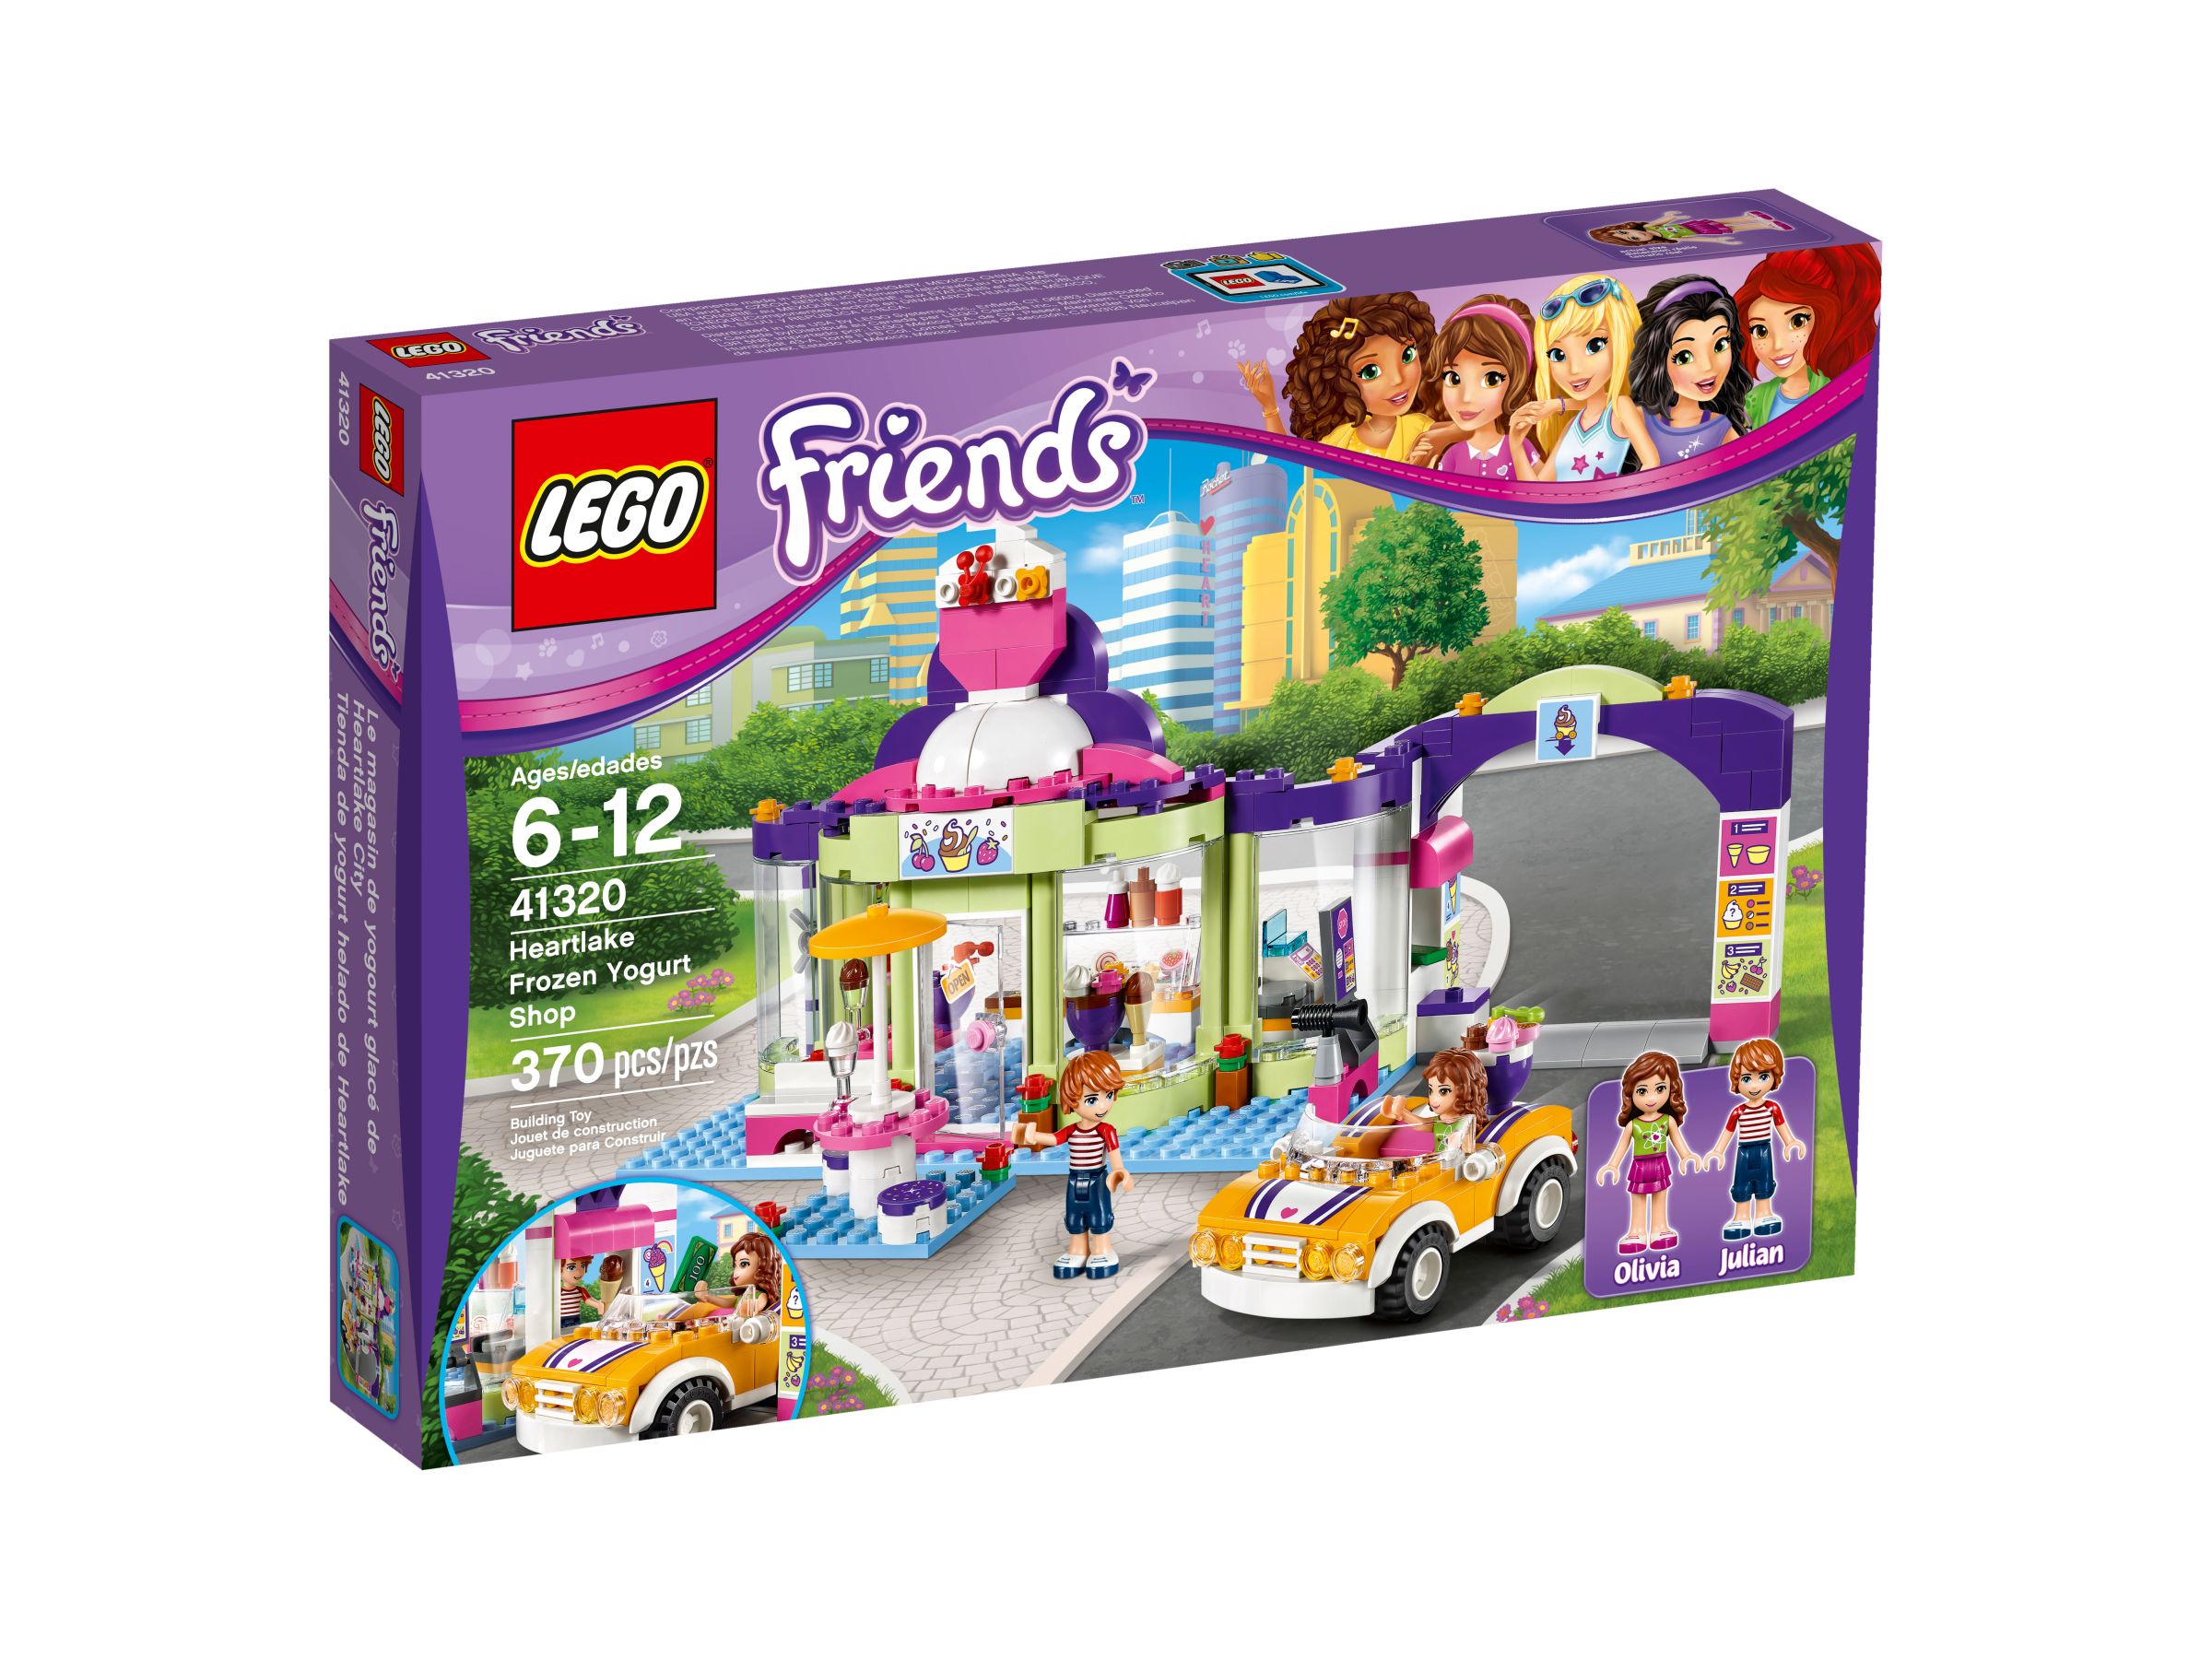 LEGO Friends 41320 Heartlake Joghurteisdiele LEGO_41320_alt1.jpg